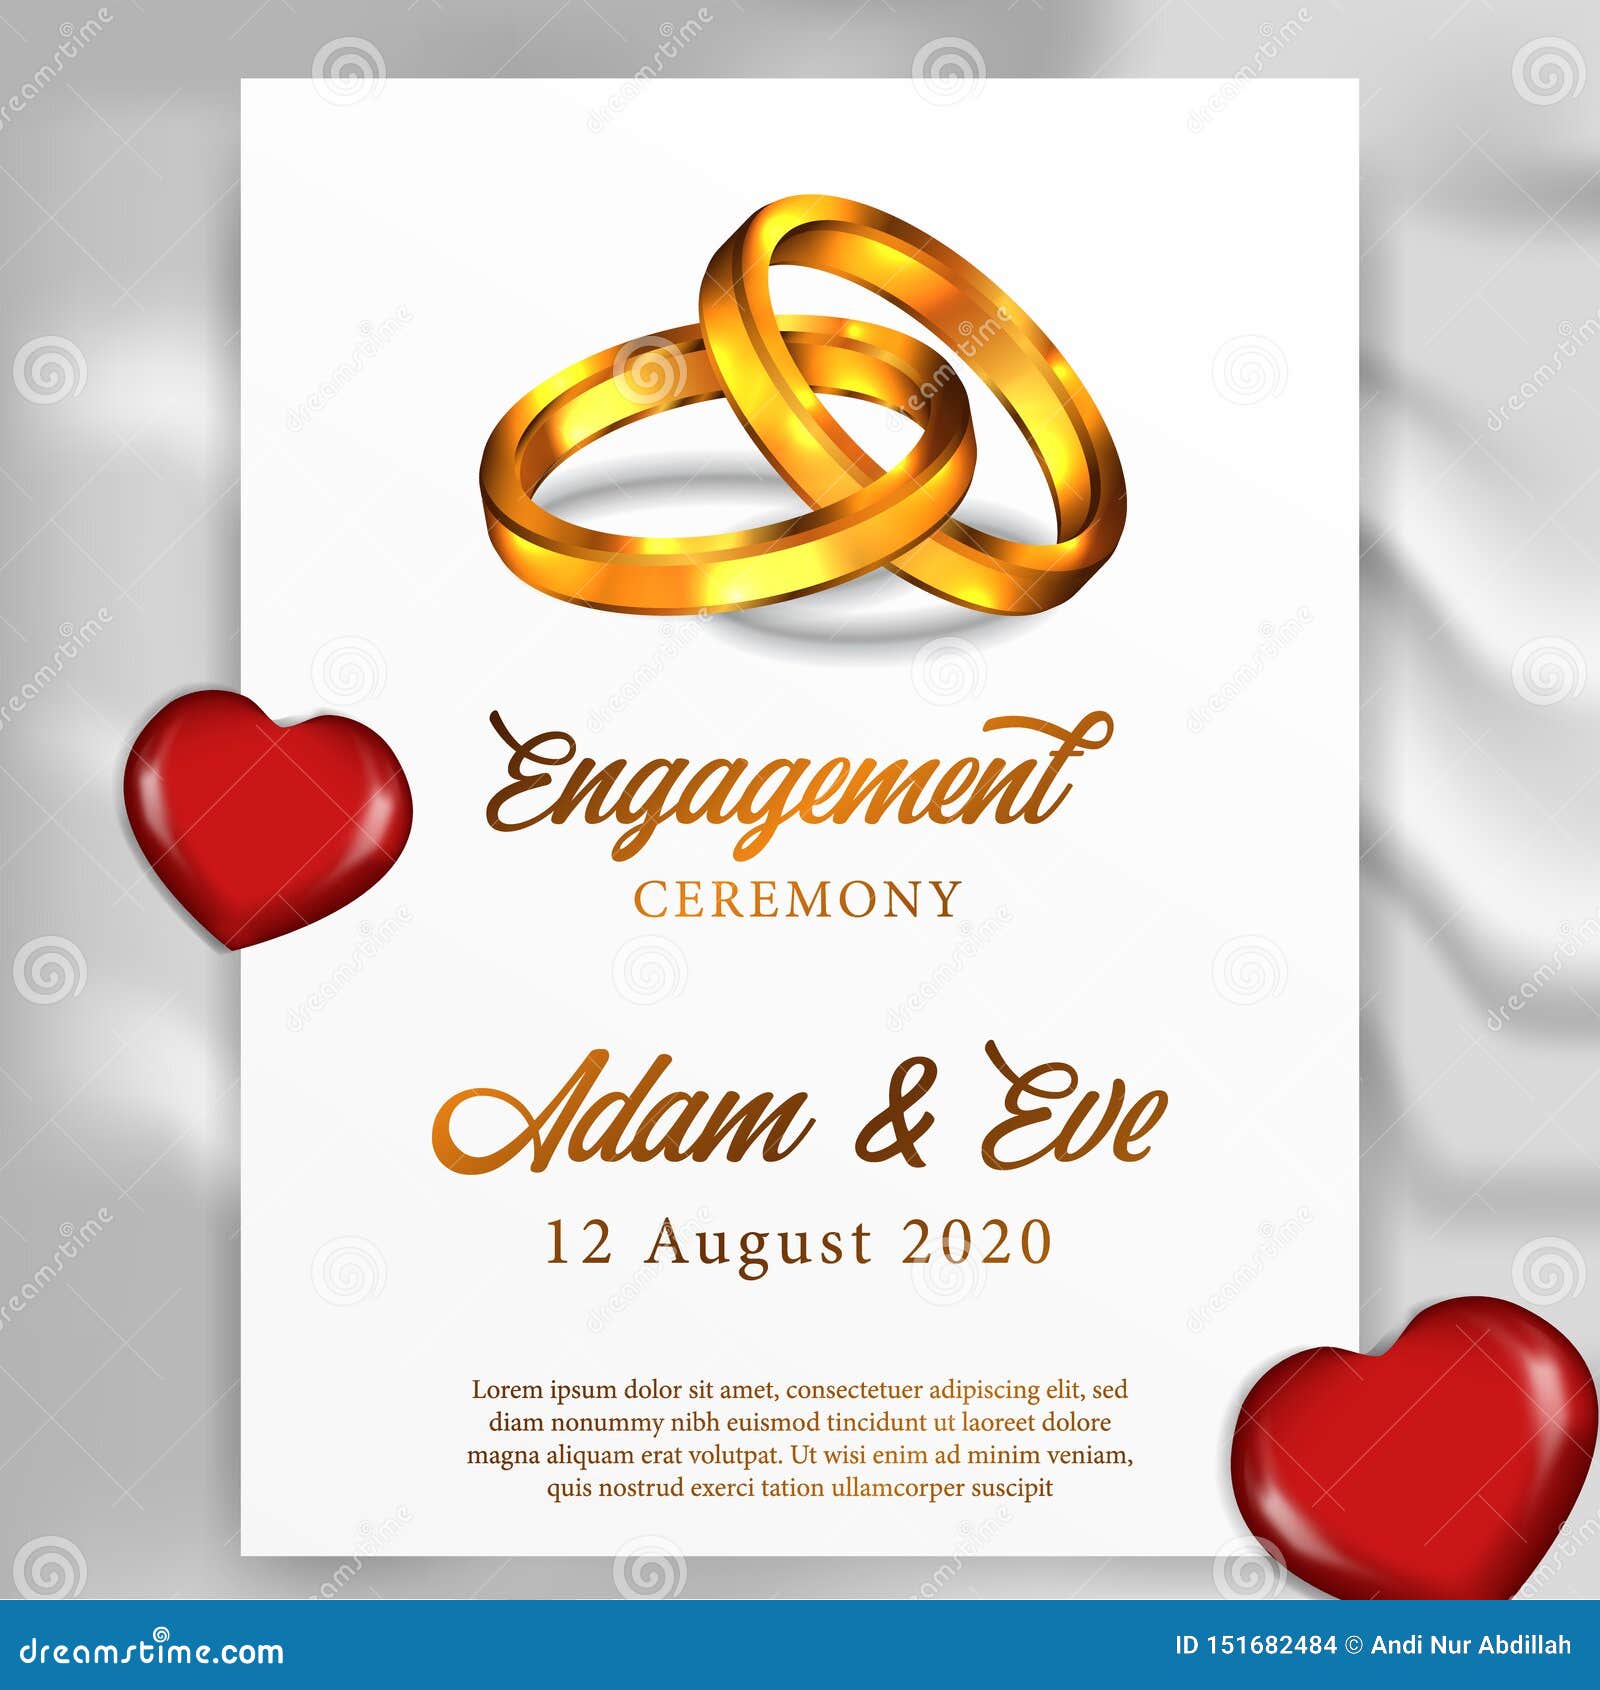 Digital Engagement Invitation Card template | Engagement invitation cards,  Digital invitations wedding, Wedding invitation cards